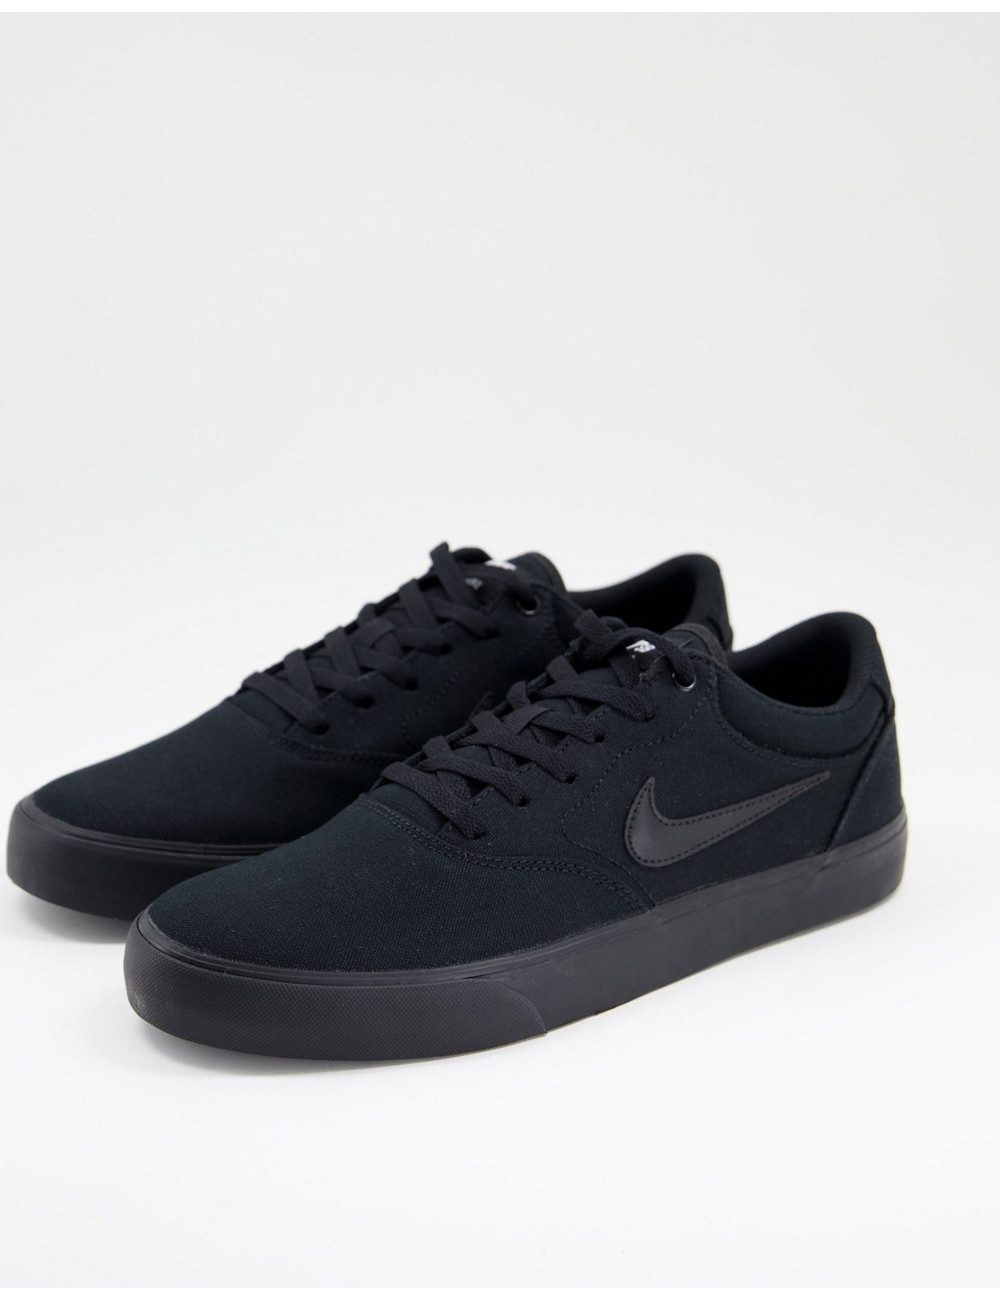 Nike SB Chron 2 in black...